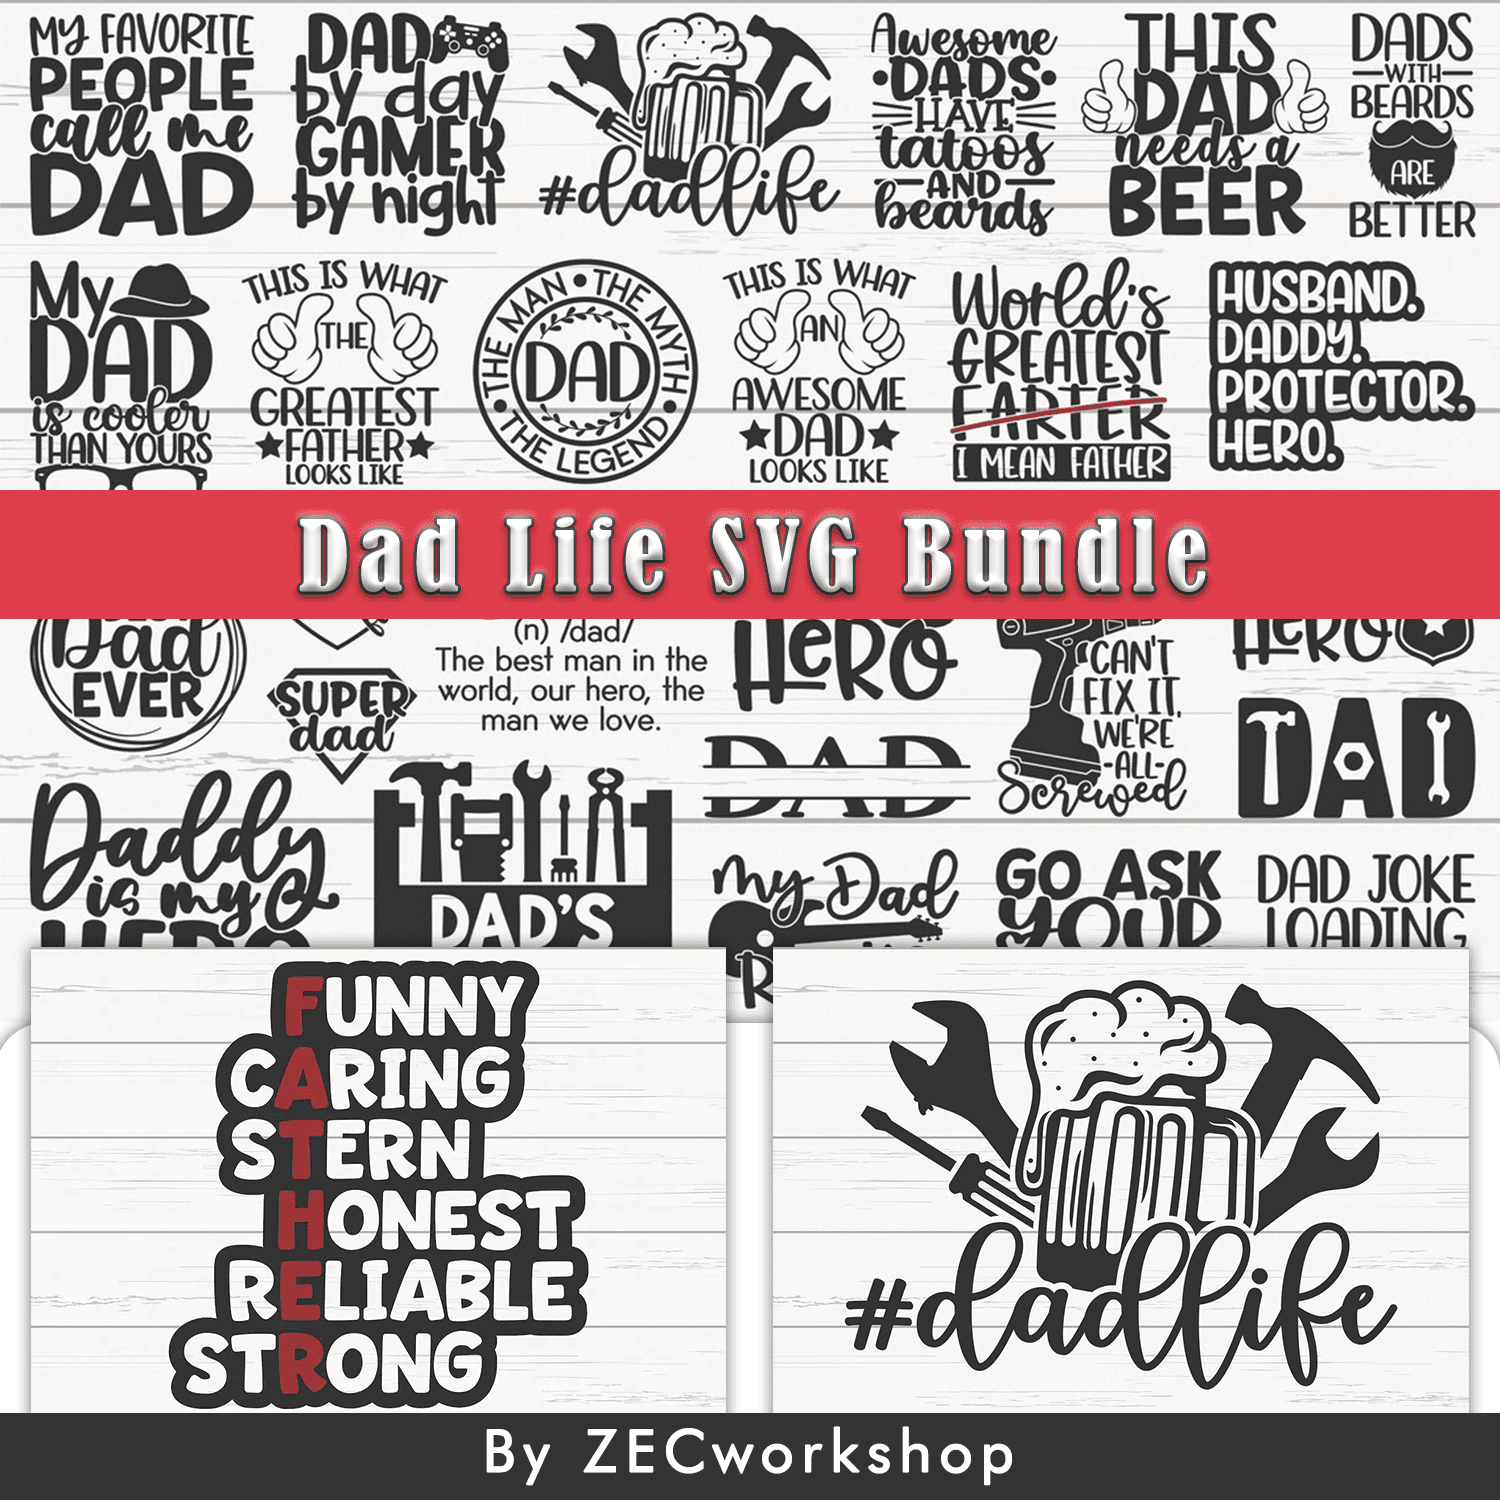 Dad Life SVG Bundle cover.